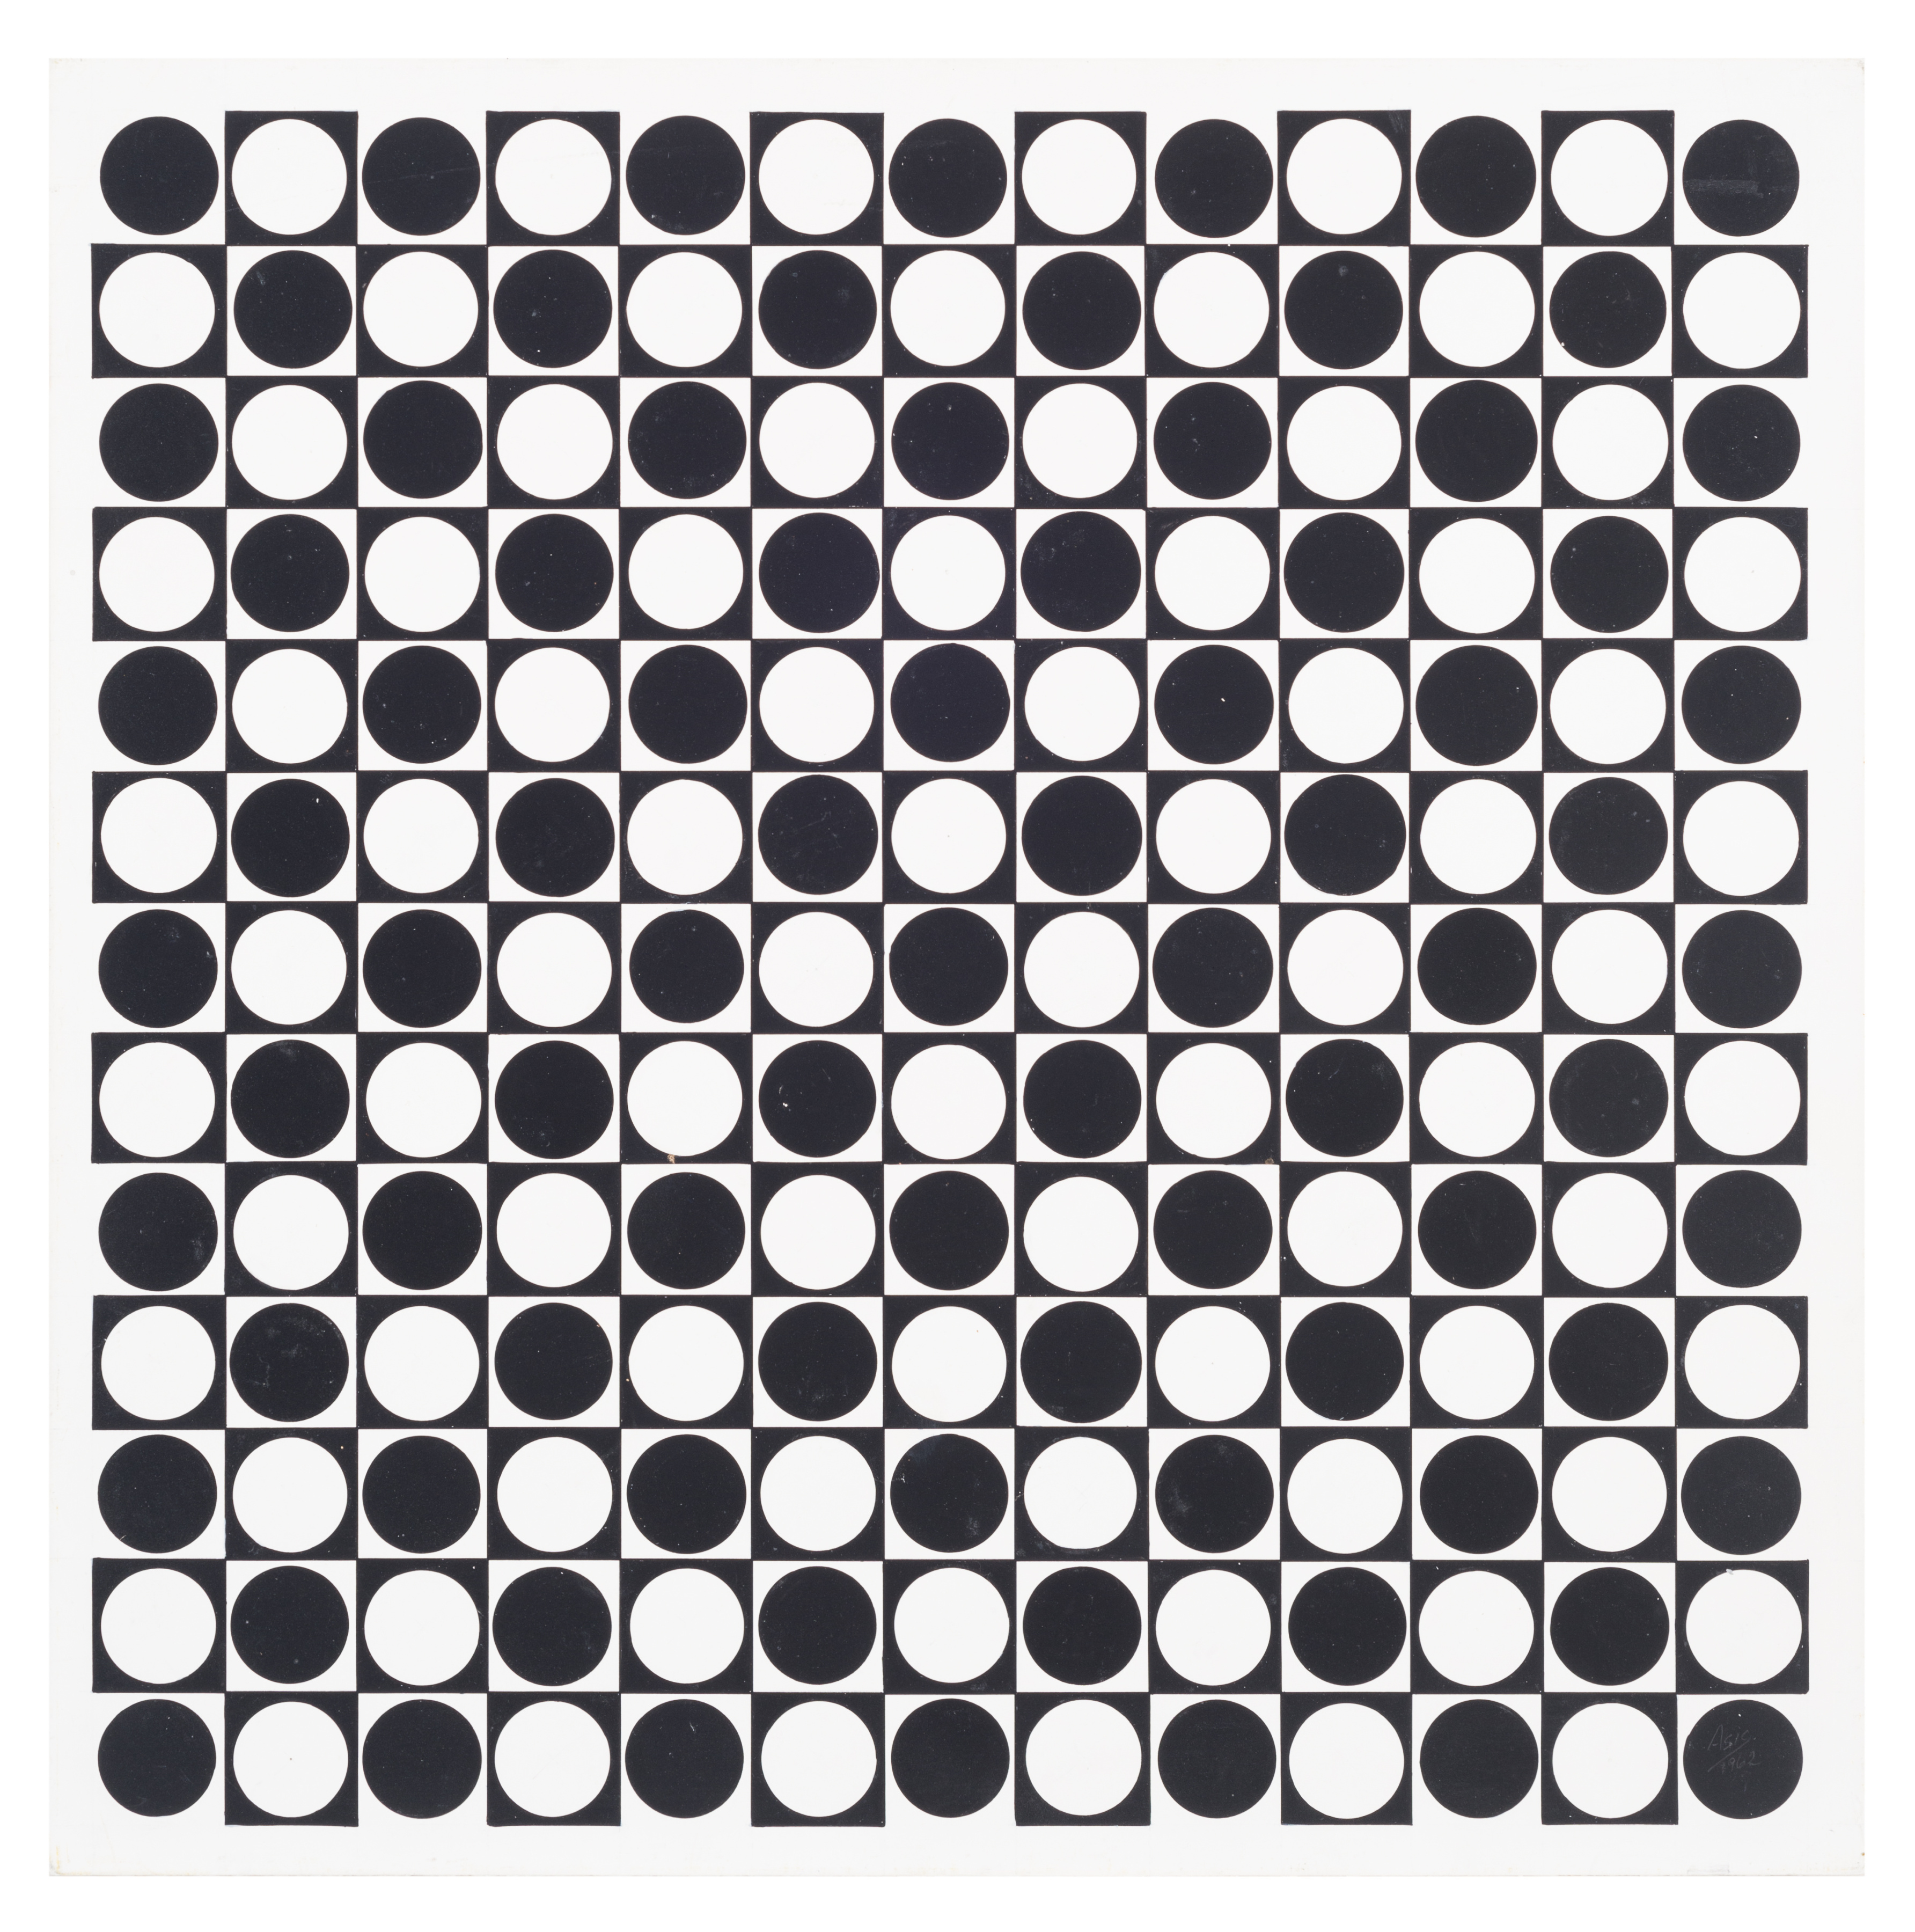 Antonio Asis,&nbsp;Untitled from the series Cercles noirs et blanc en progression, 1962,&nbsp;Gouache on cardboard,&nbsp;15 3/4 x 15 3/4 in. (40 x 40 cm.)